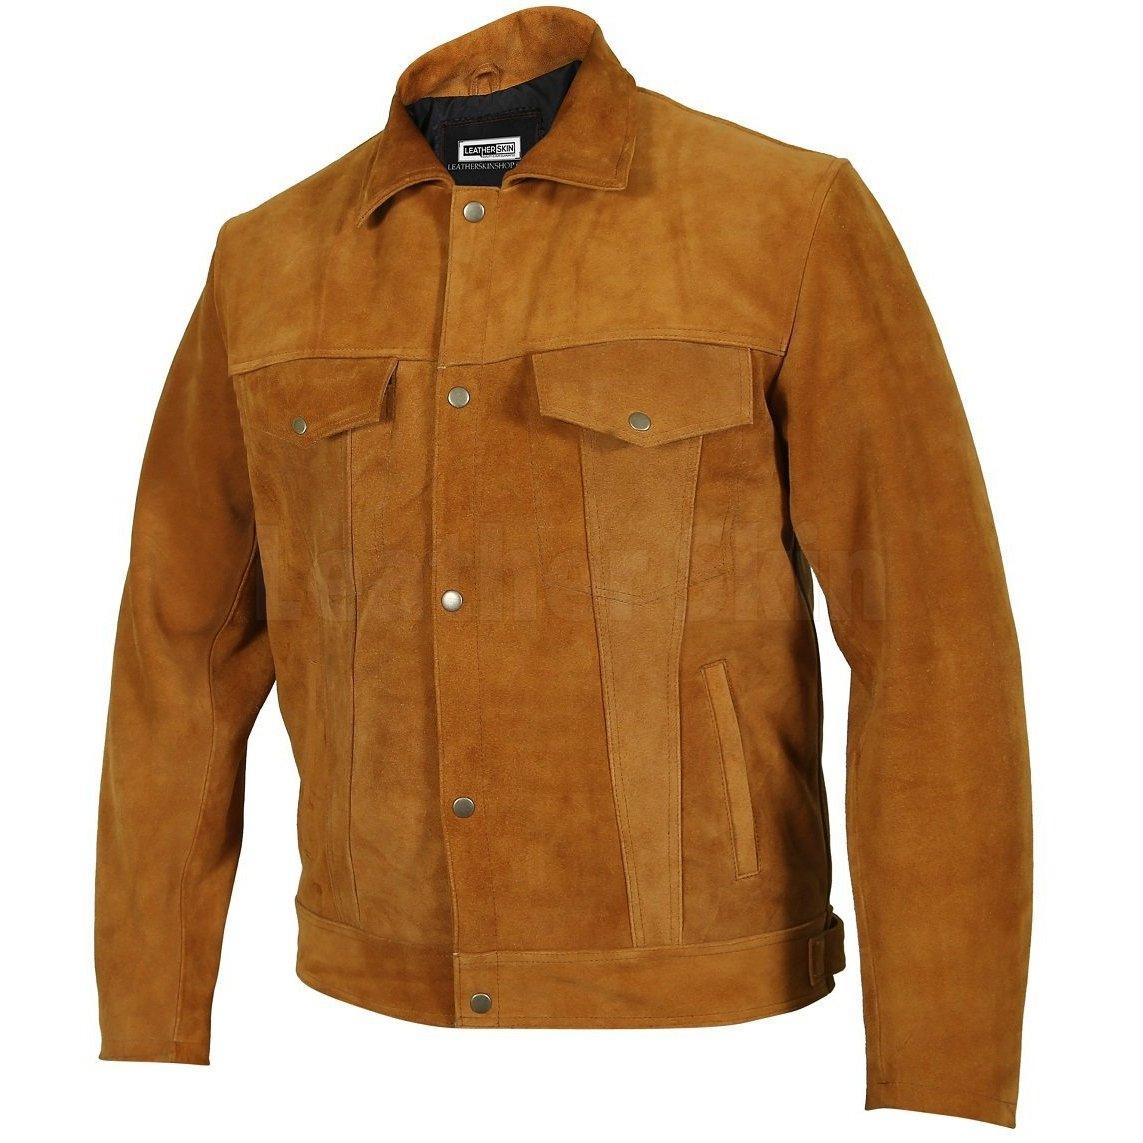 Men's Tan Suede Genuine Western Leather Jacket